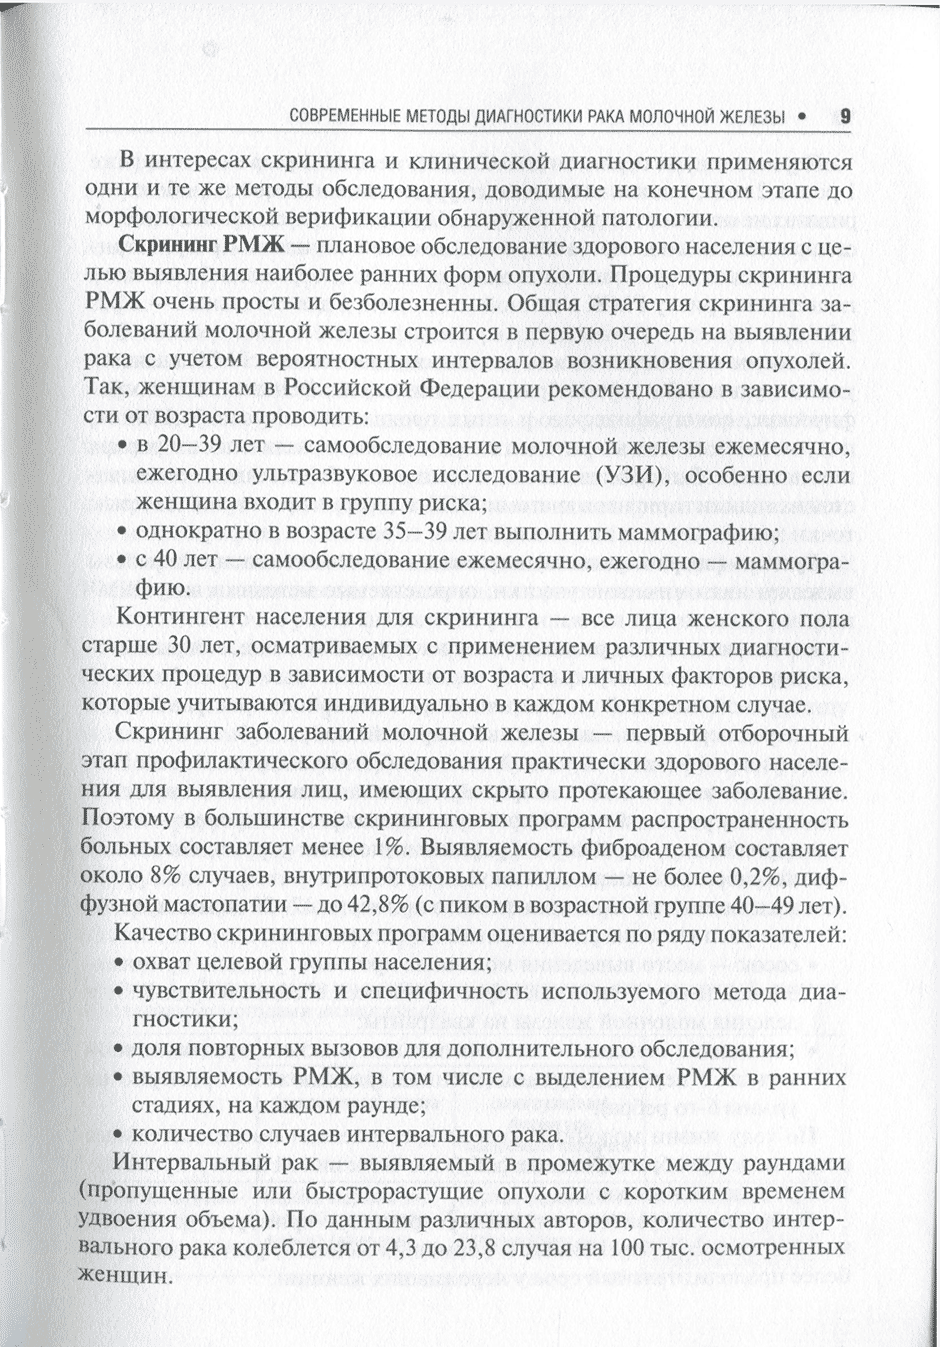 Пример страницы из книги "Рак молочной железы" - Ш. Х. Ганцева